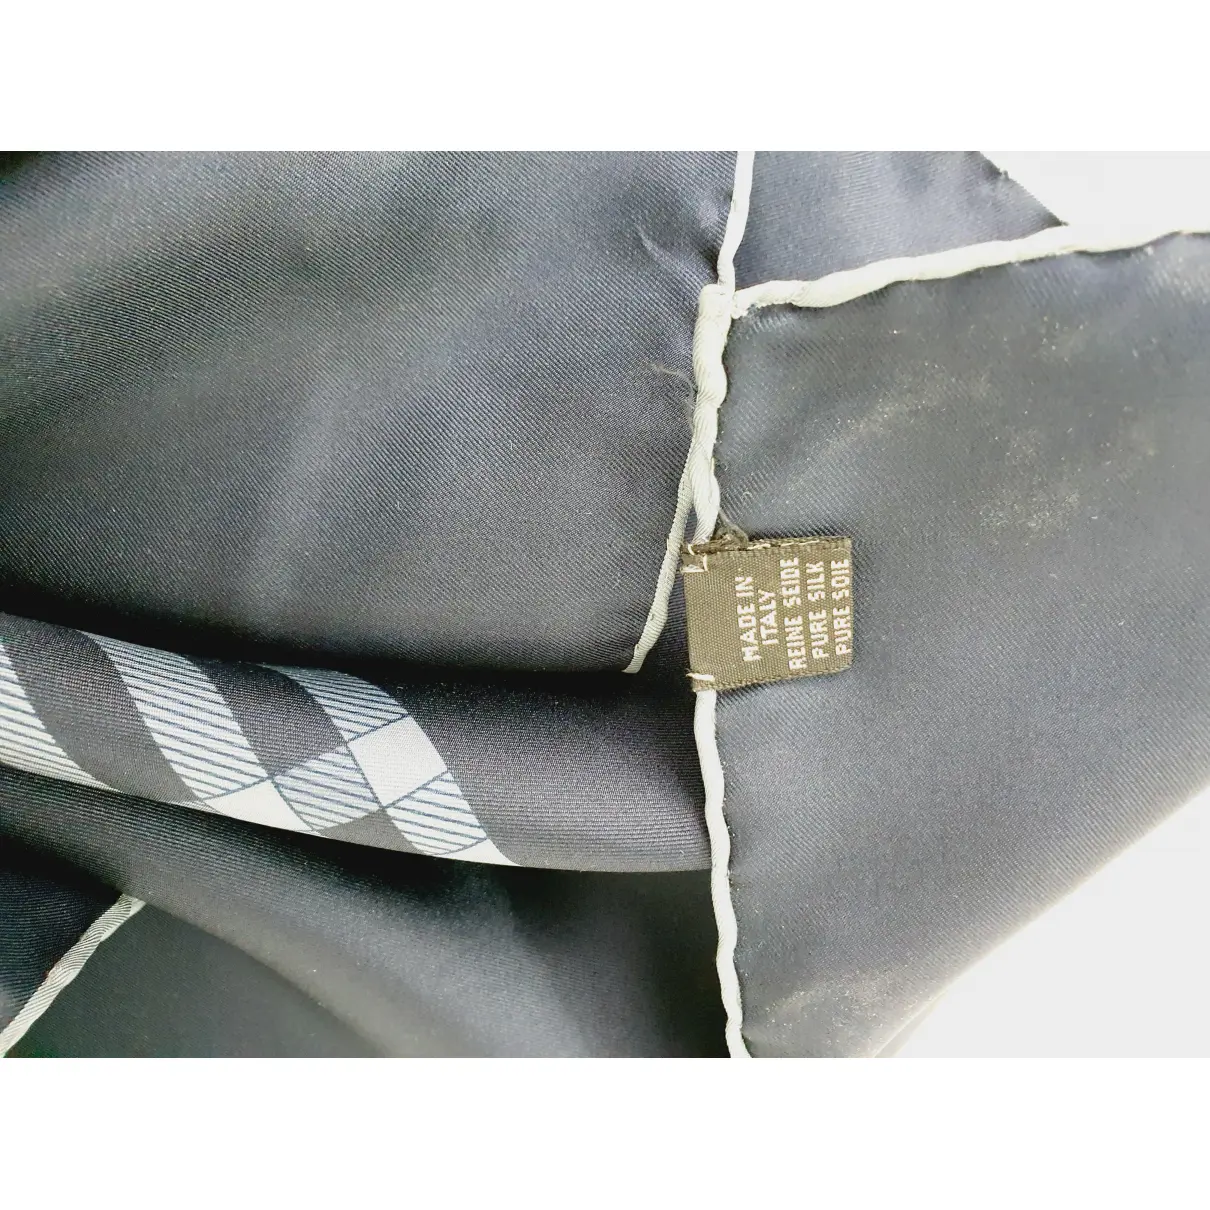 Silk handkerchief Burberry - Vintage